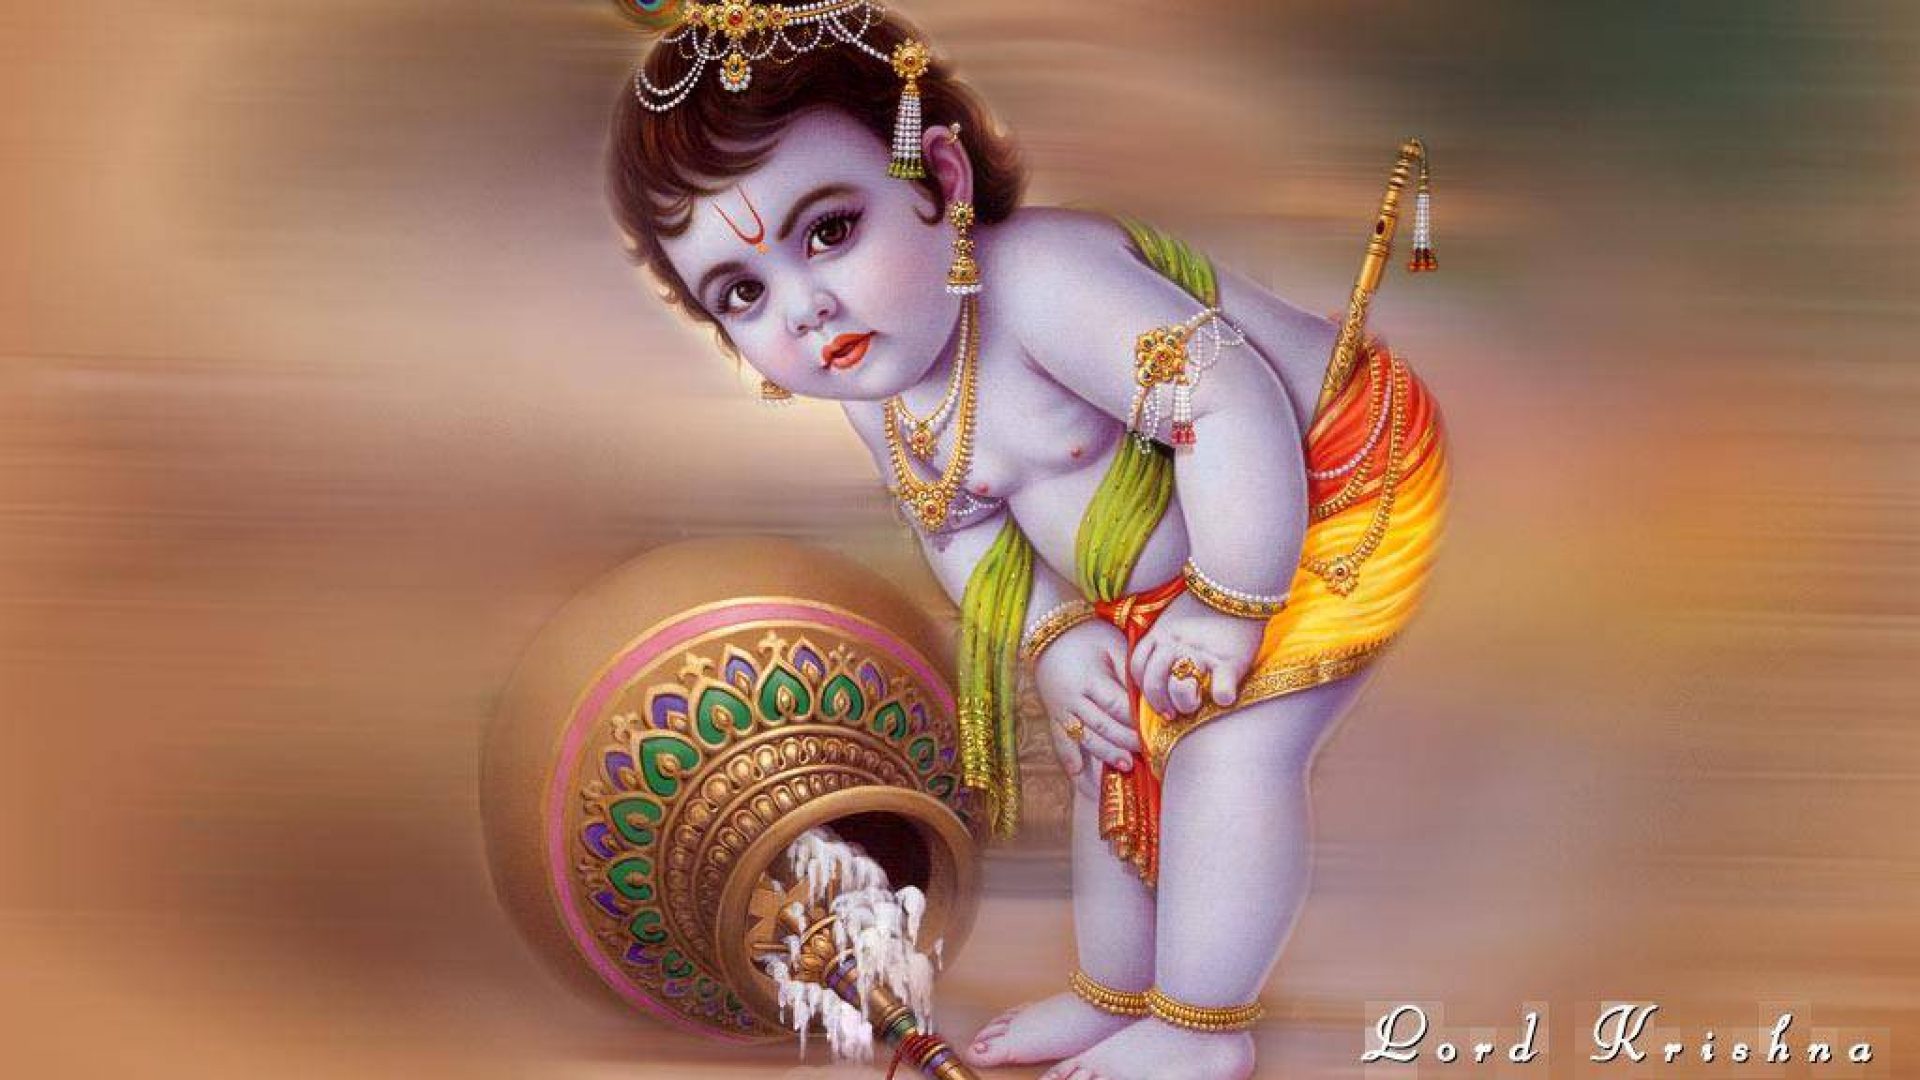 Cute Baby Krishna Images | Hindu Gods and Goddesses